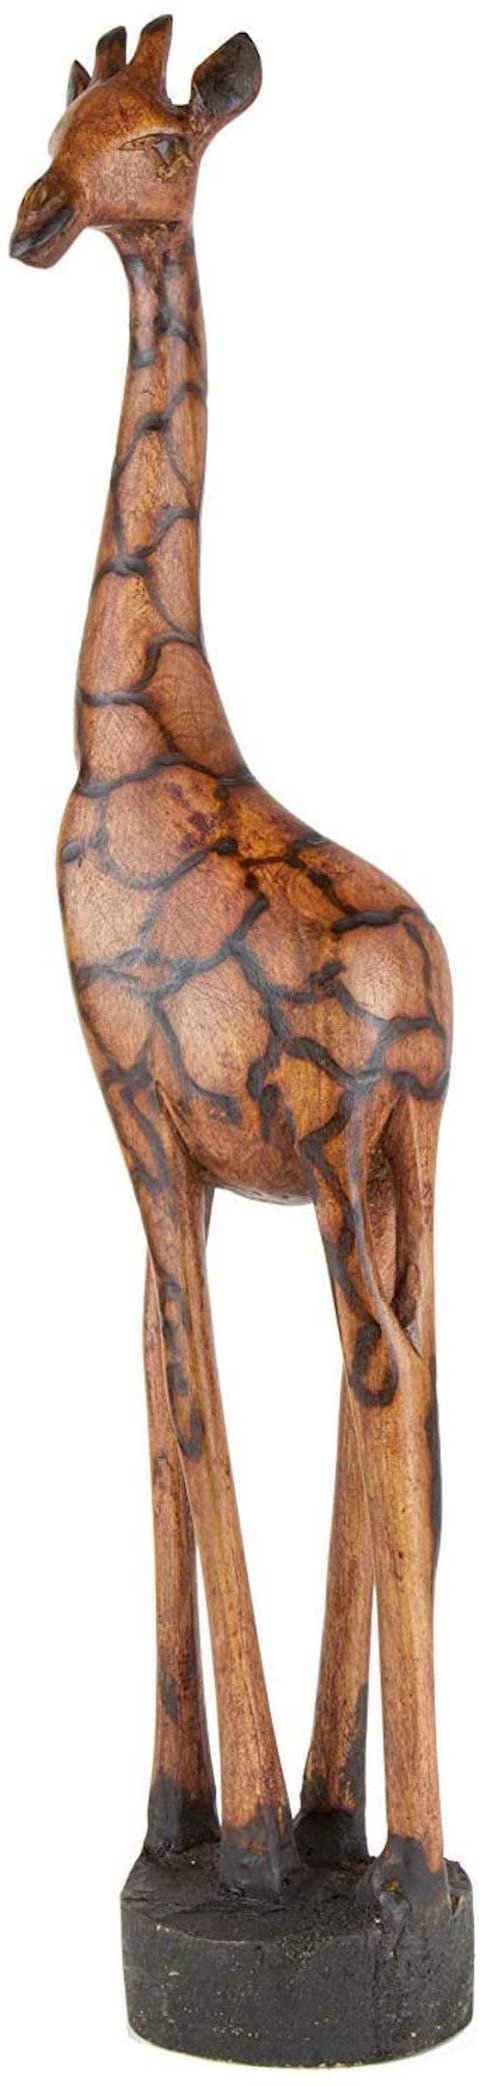 Afrika-Deko Afrikafigur Samia, Handarbeit aus SIMBABWE sehr hochwertige Holz Giraffe